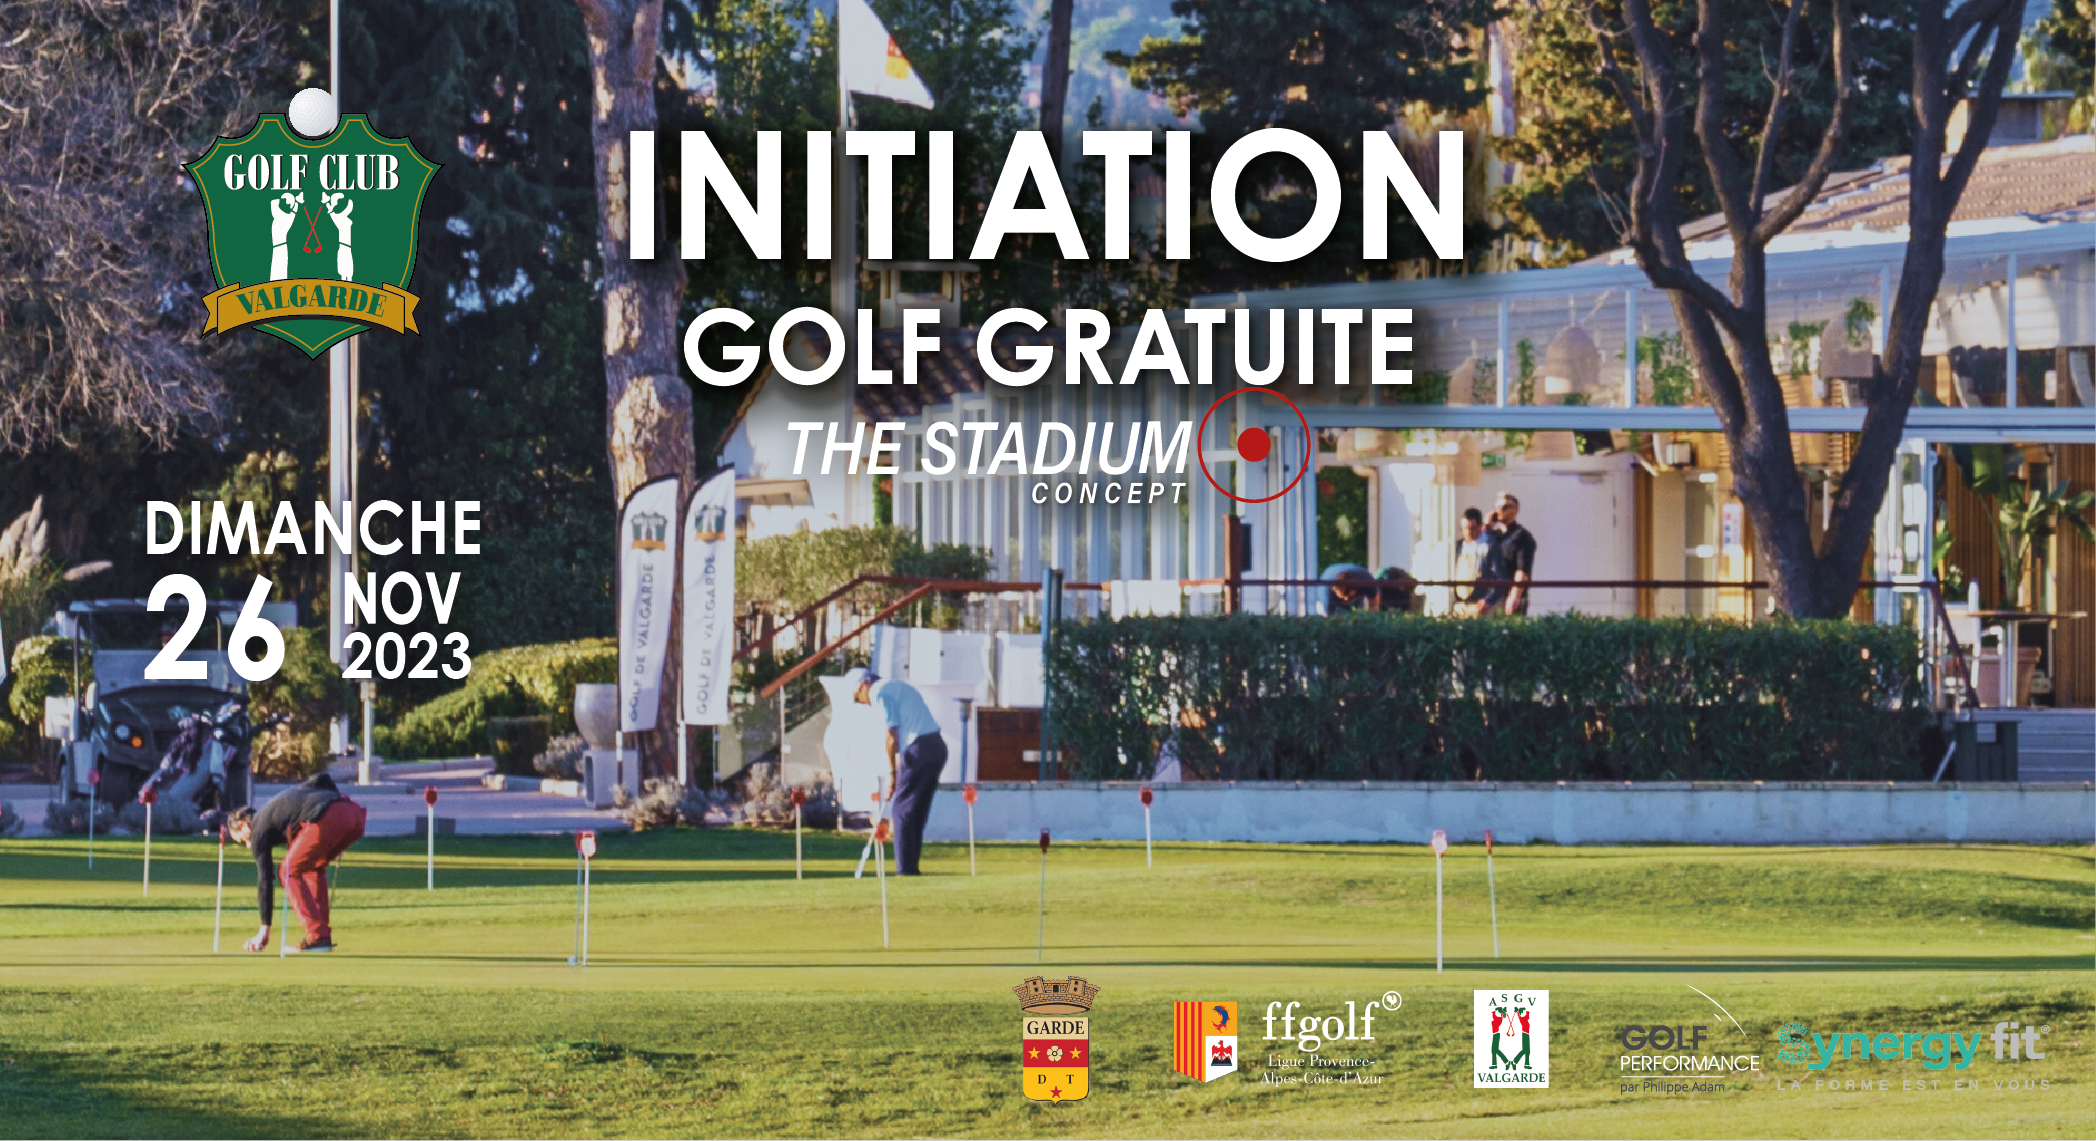 Initiation gratuite au golf – dimanche 26 NOVEMBRE